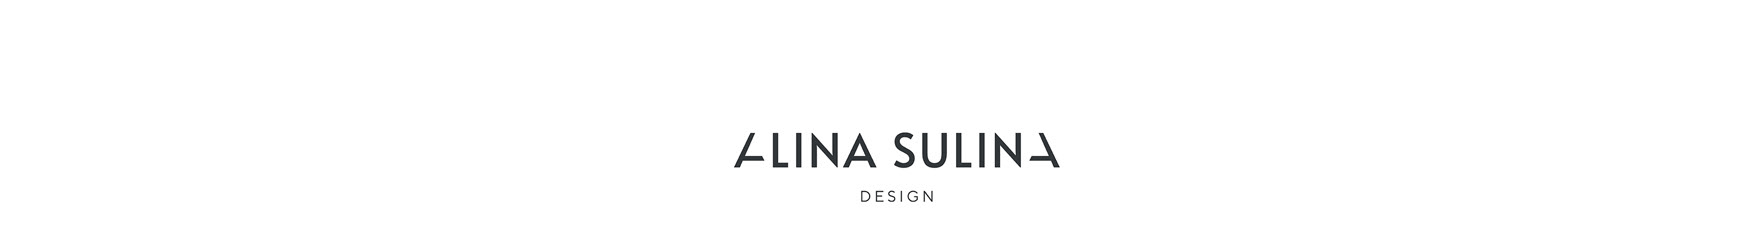 AlinaSulina Design studio's profile banner